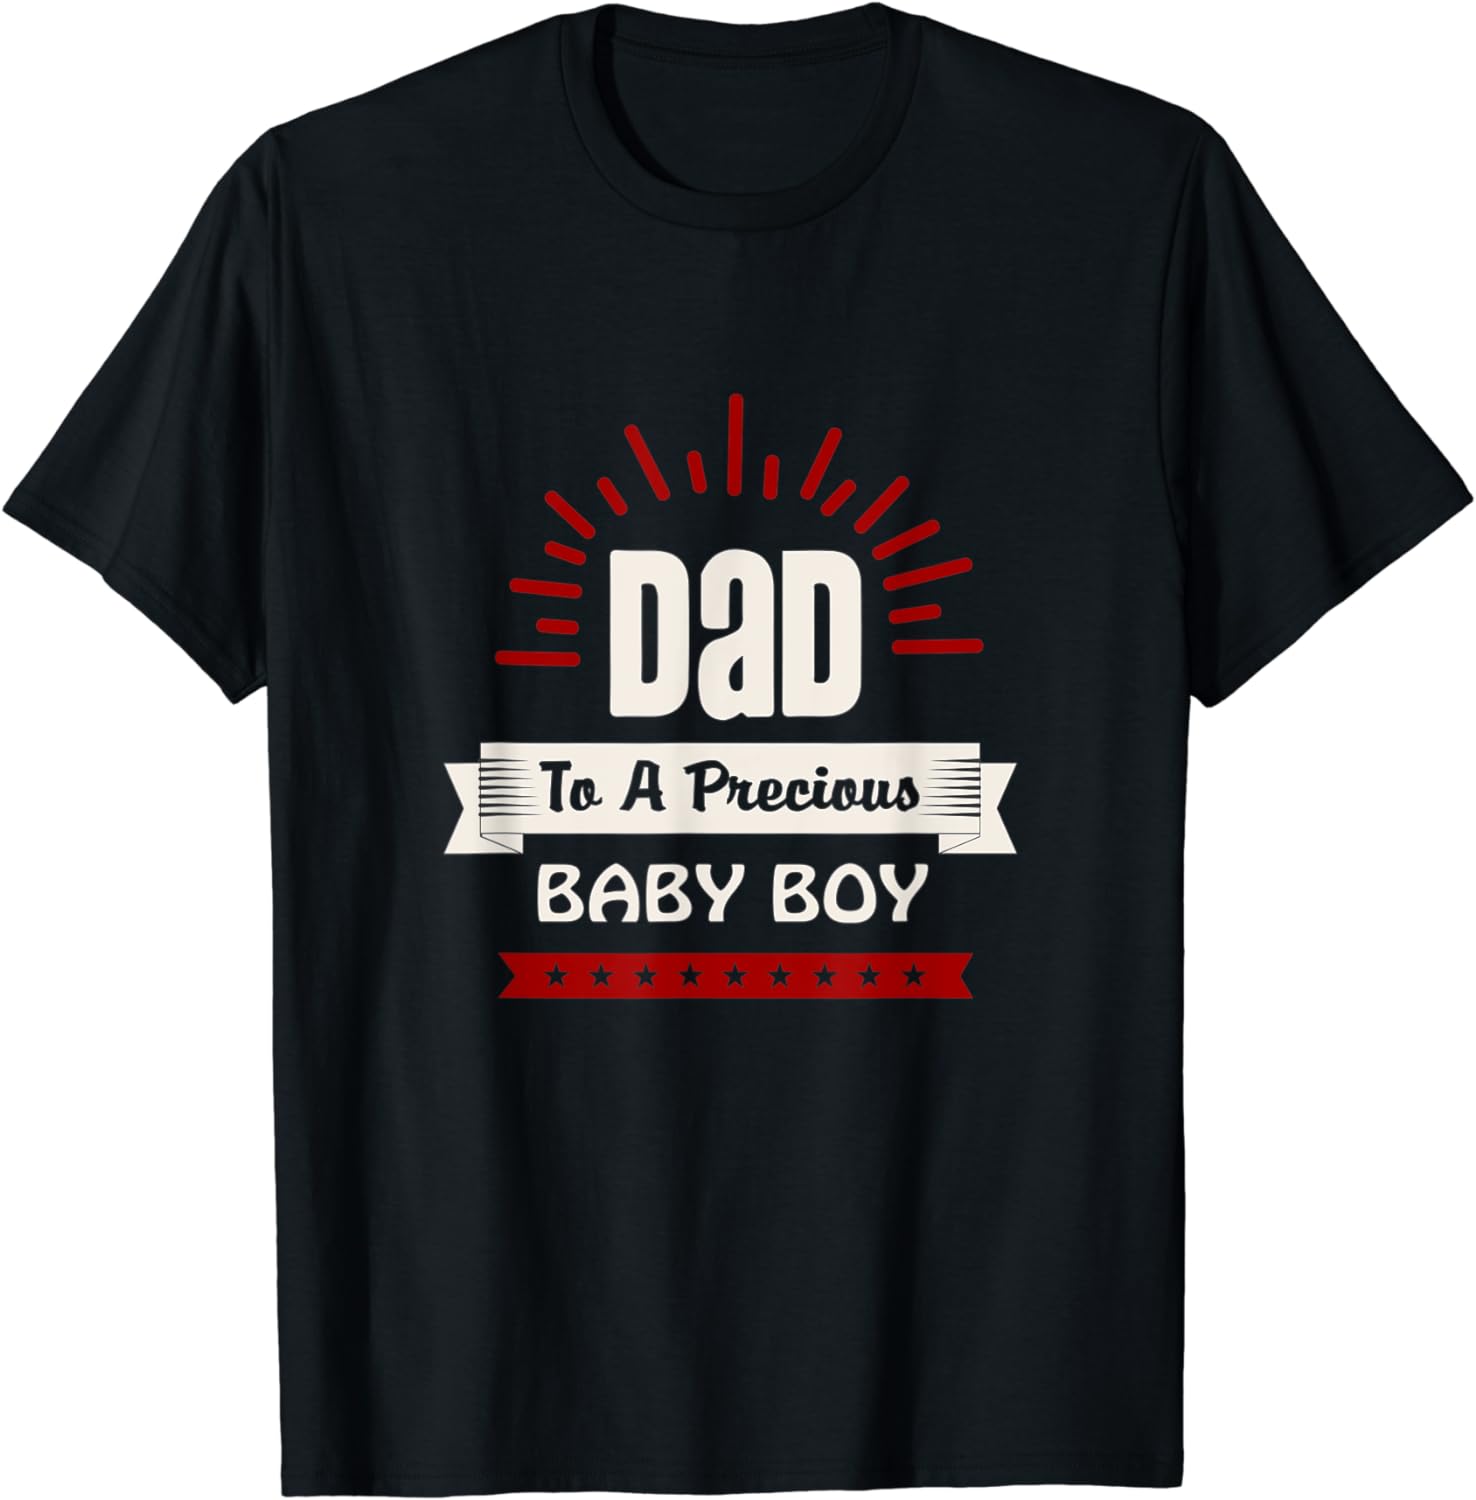 Dad To A Precious Baby Boy T-Shirt